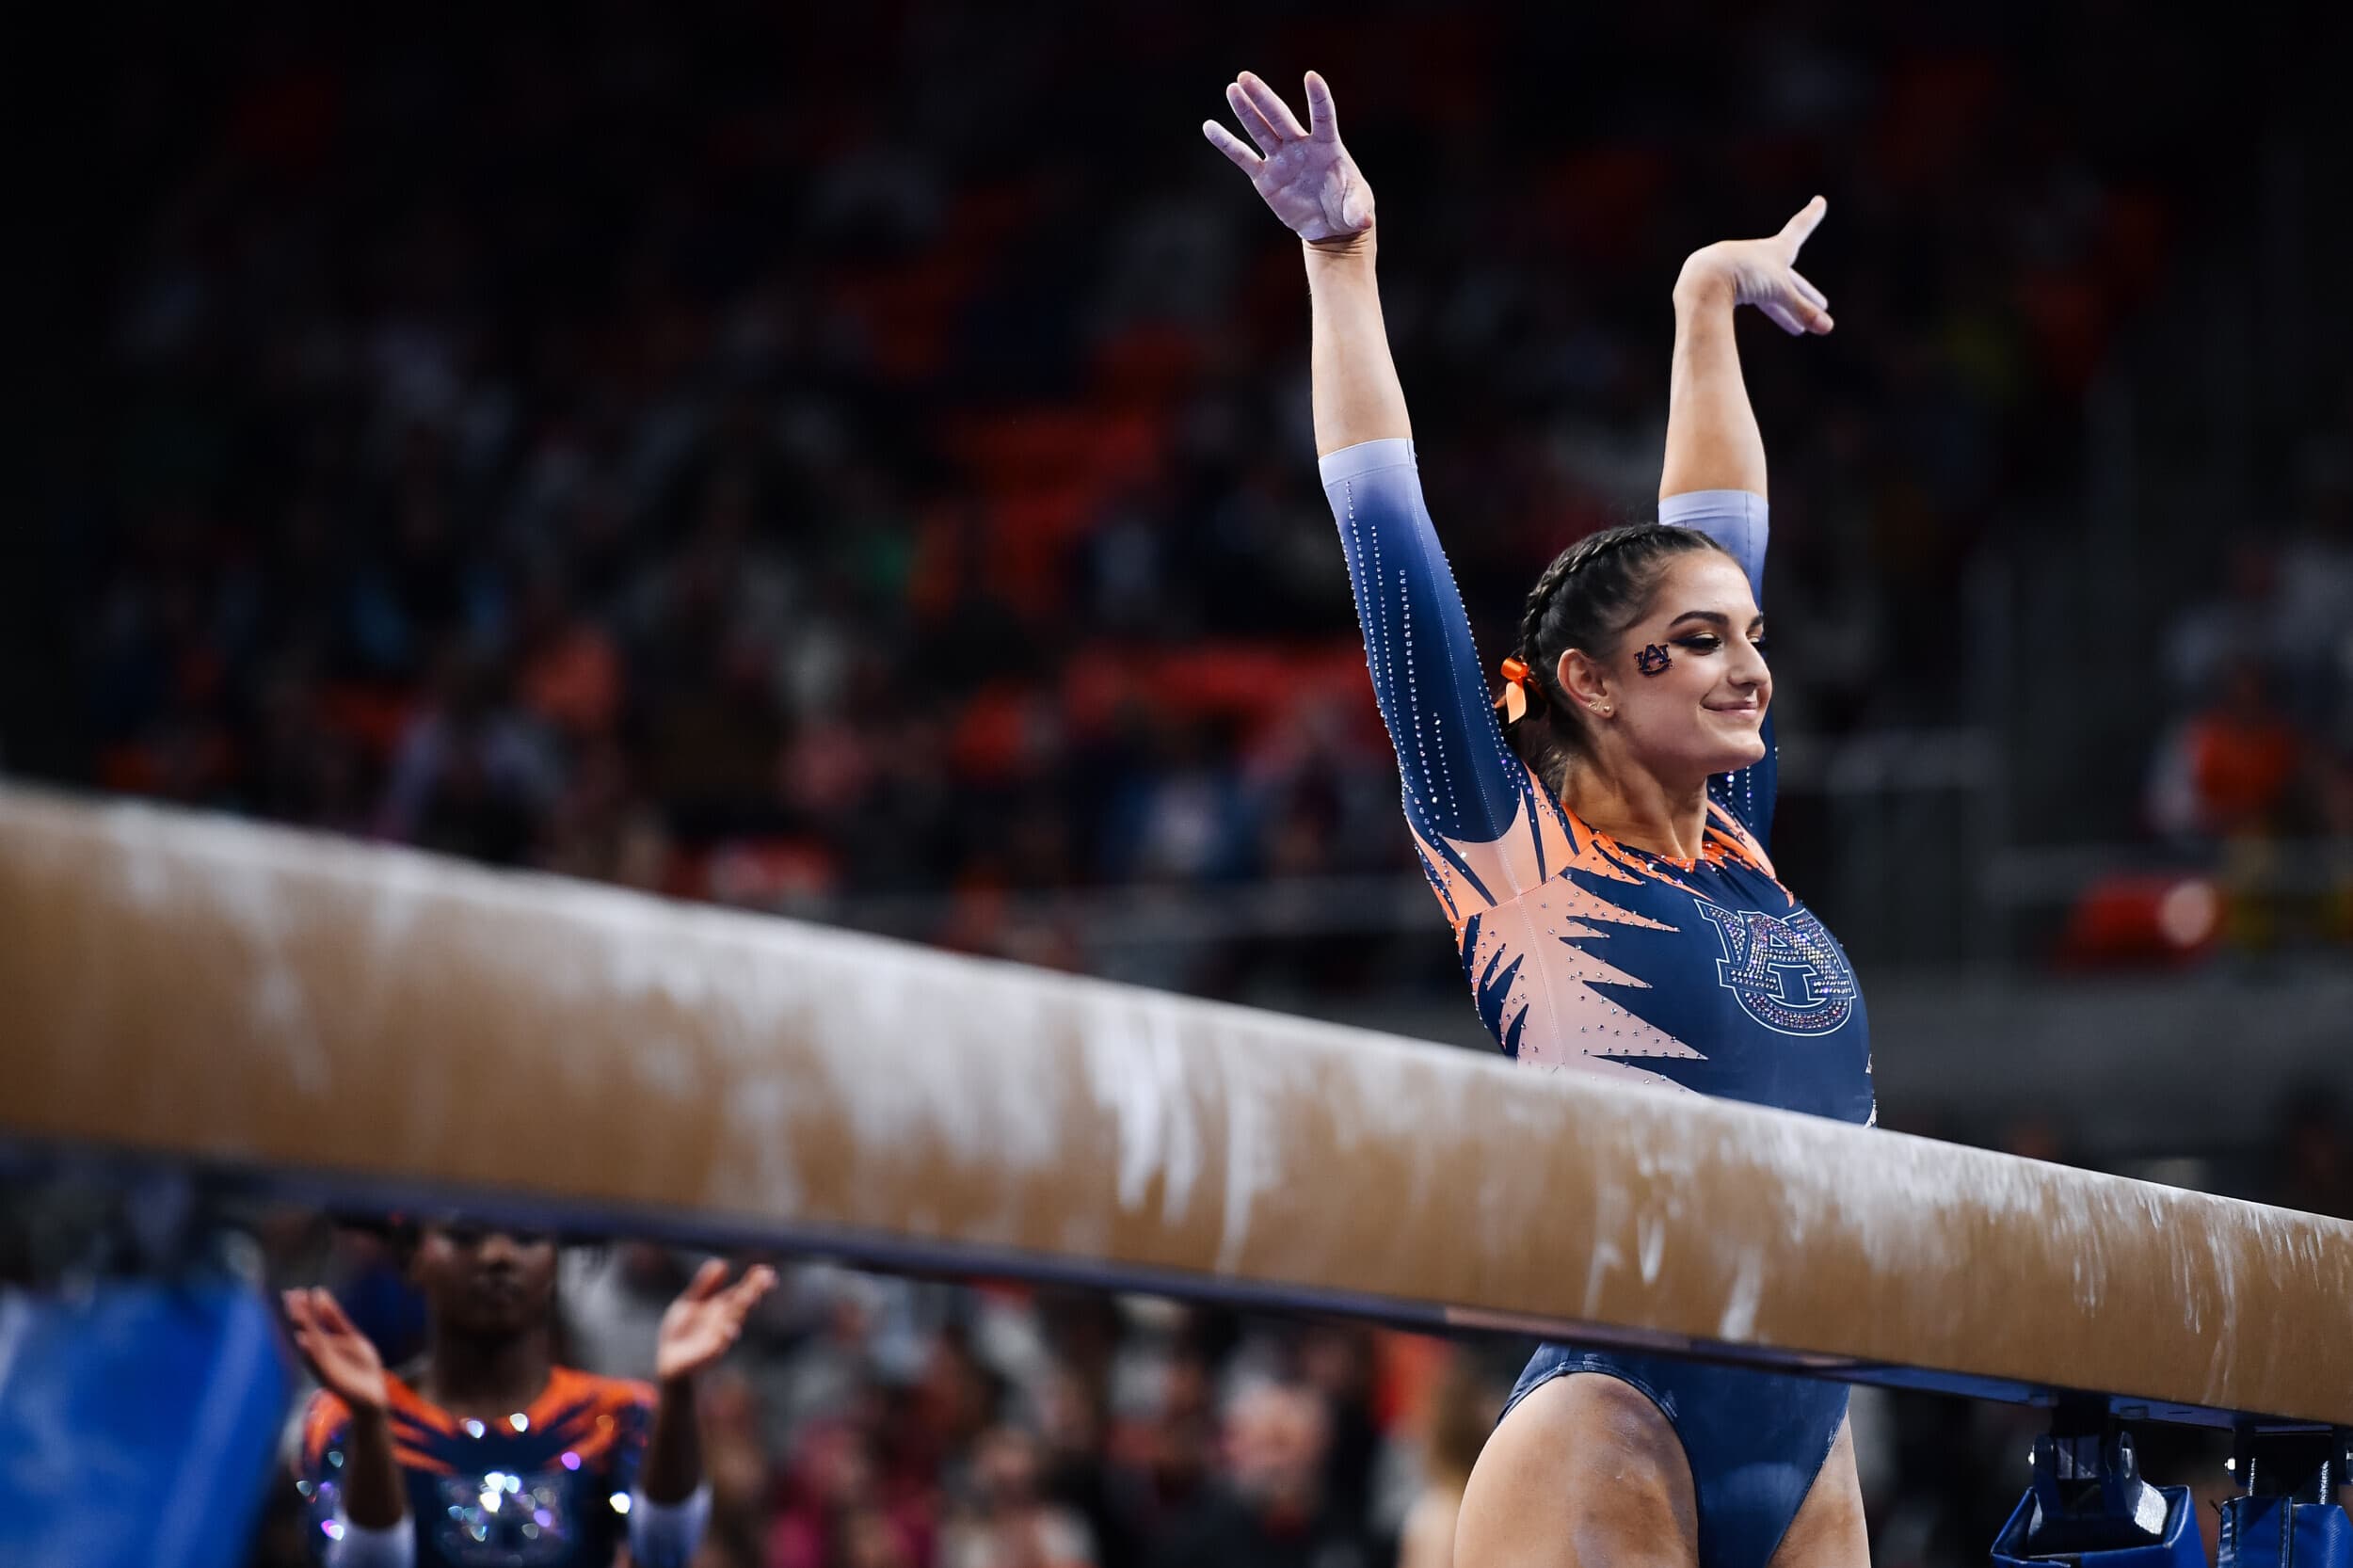 Cassie Stevens before her beam routine in meet between Auburn gymnastics and NC State. | credit Elaina Eichorn / Auburn Athletics